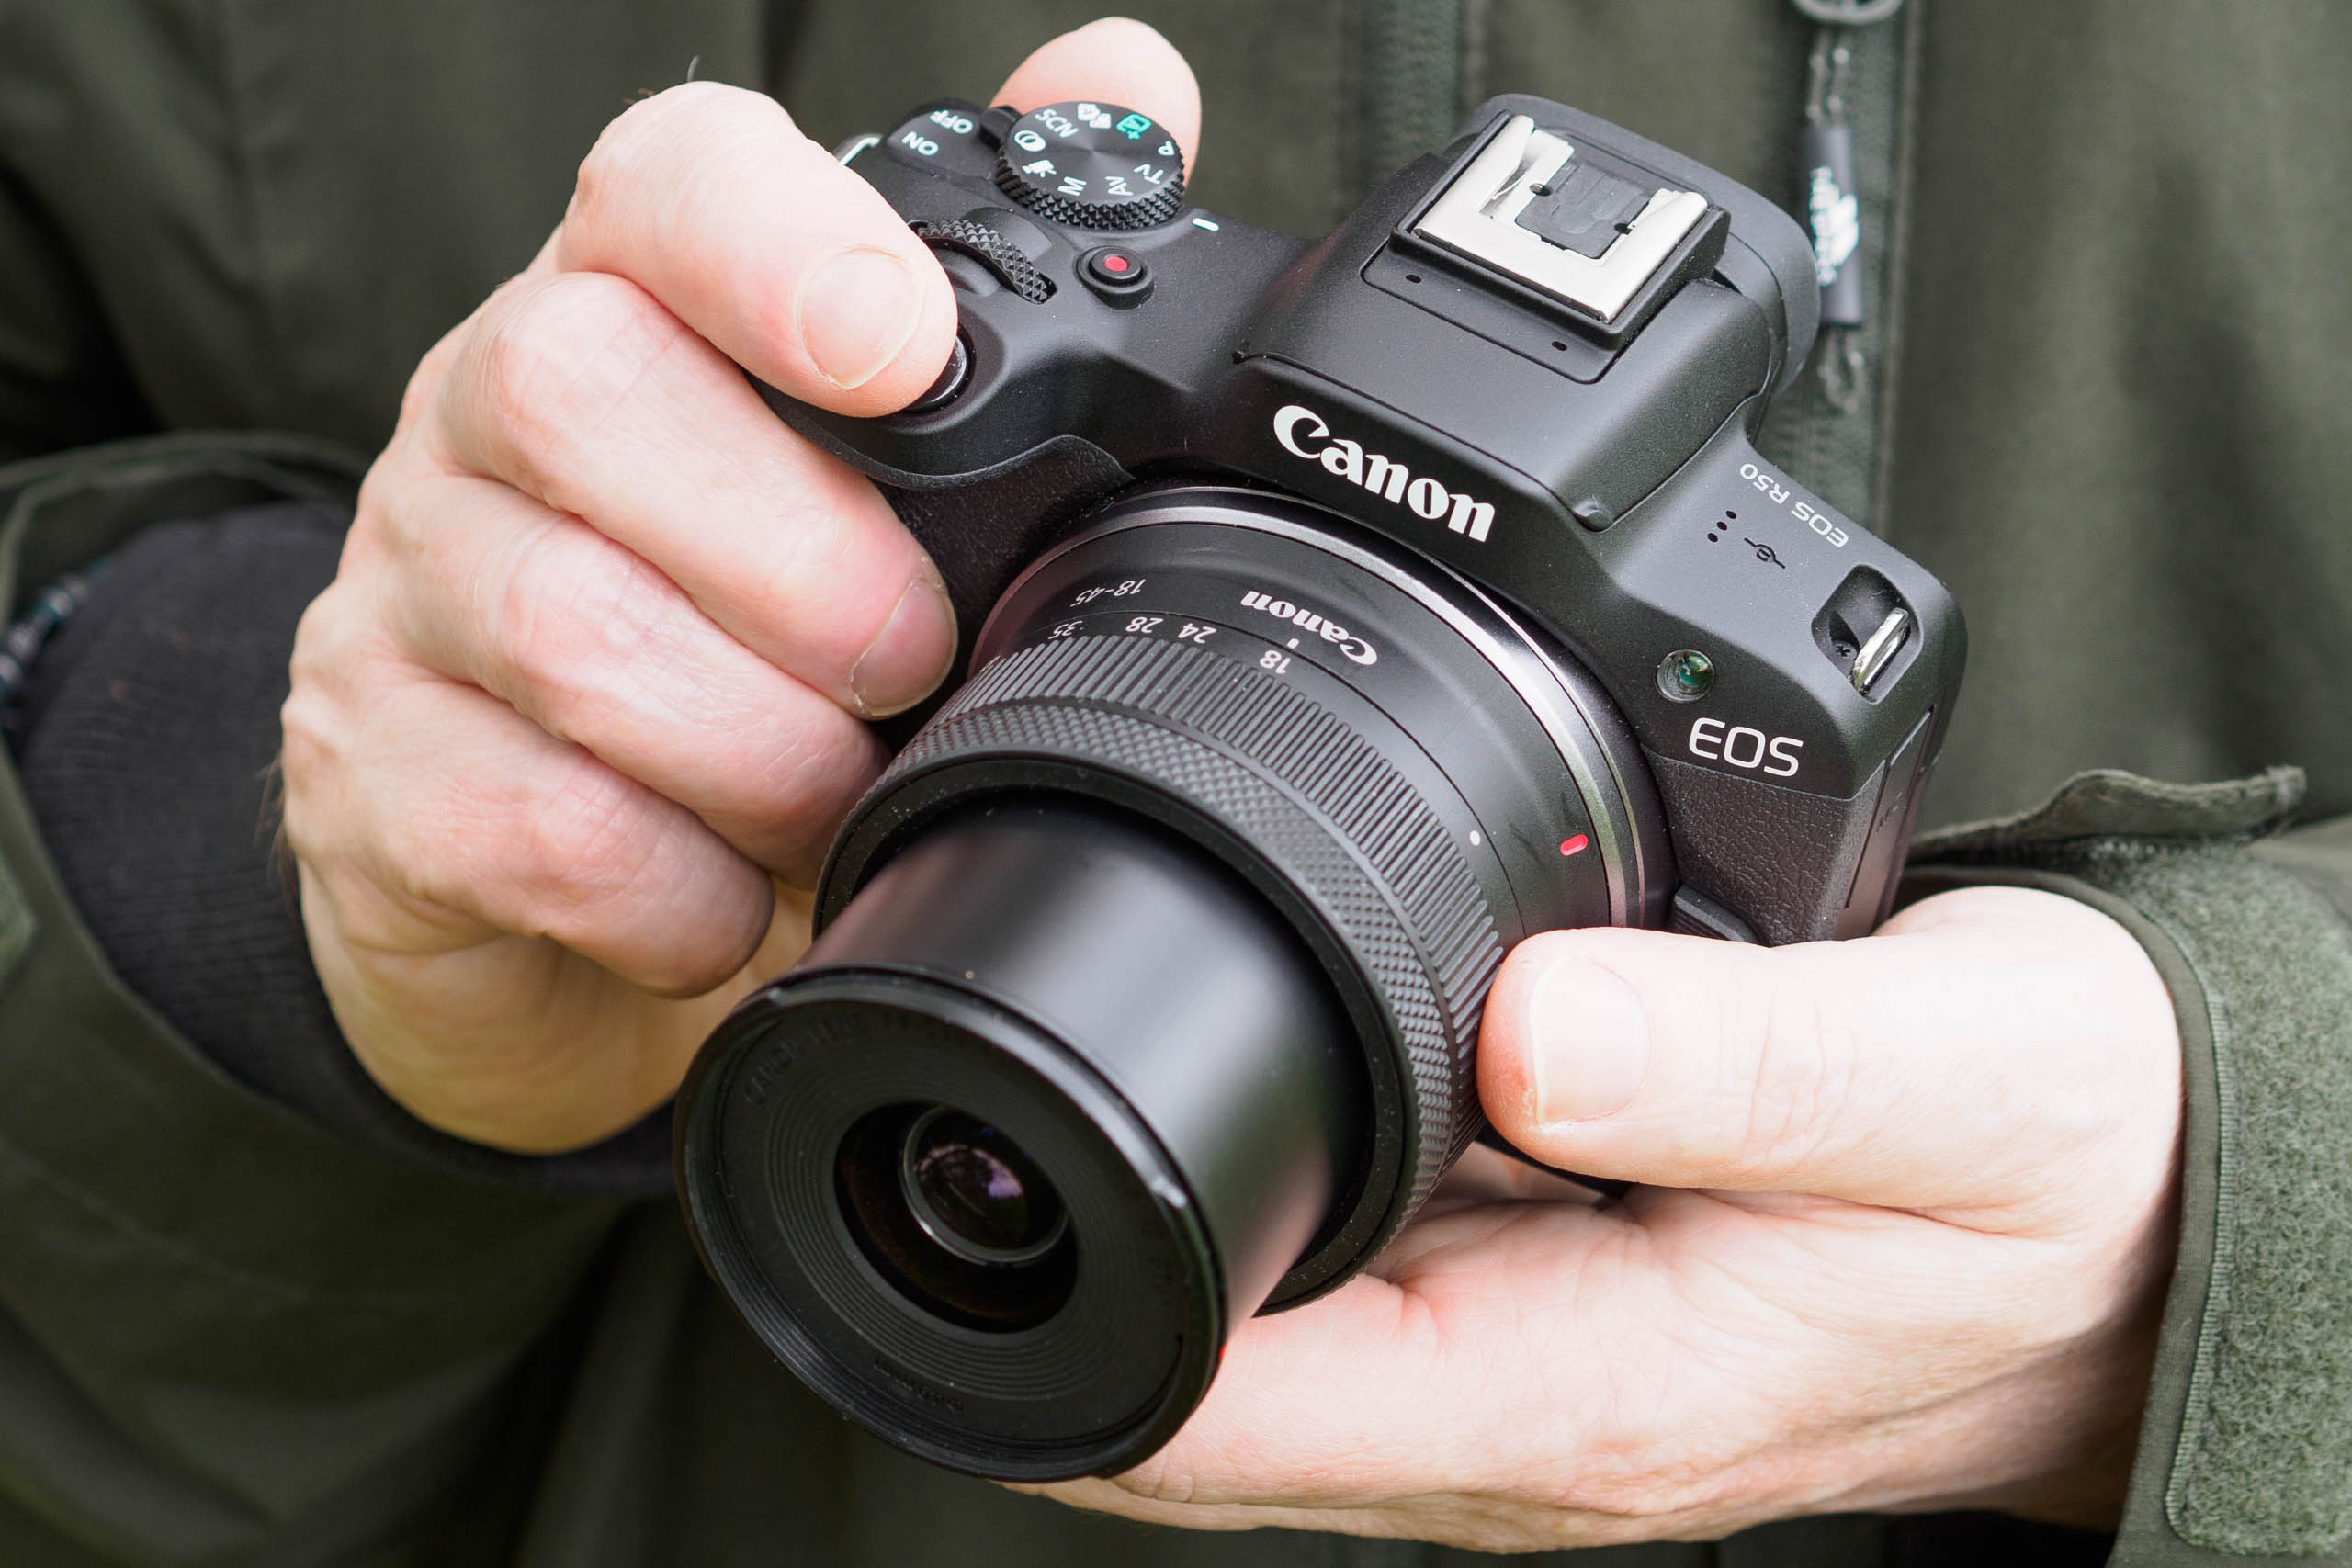 Canon EOS R50 - Photo-Review